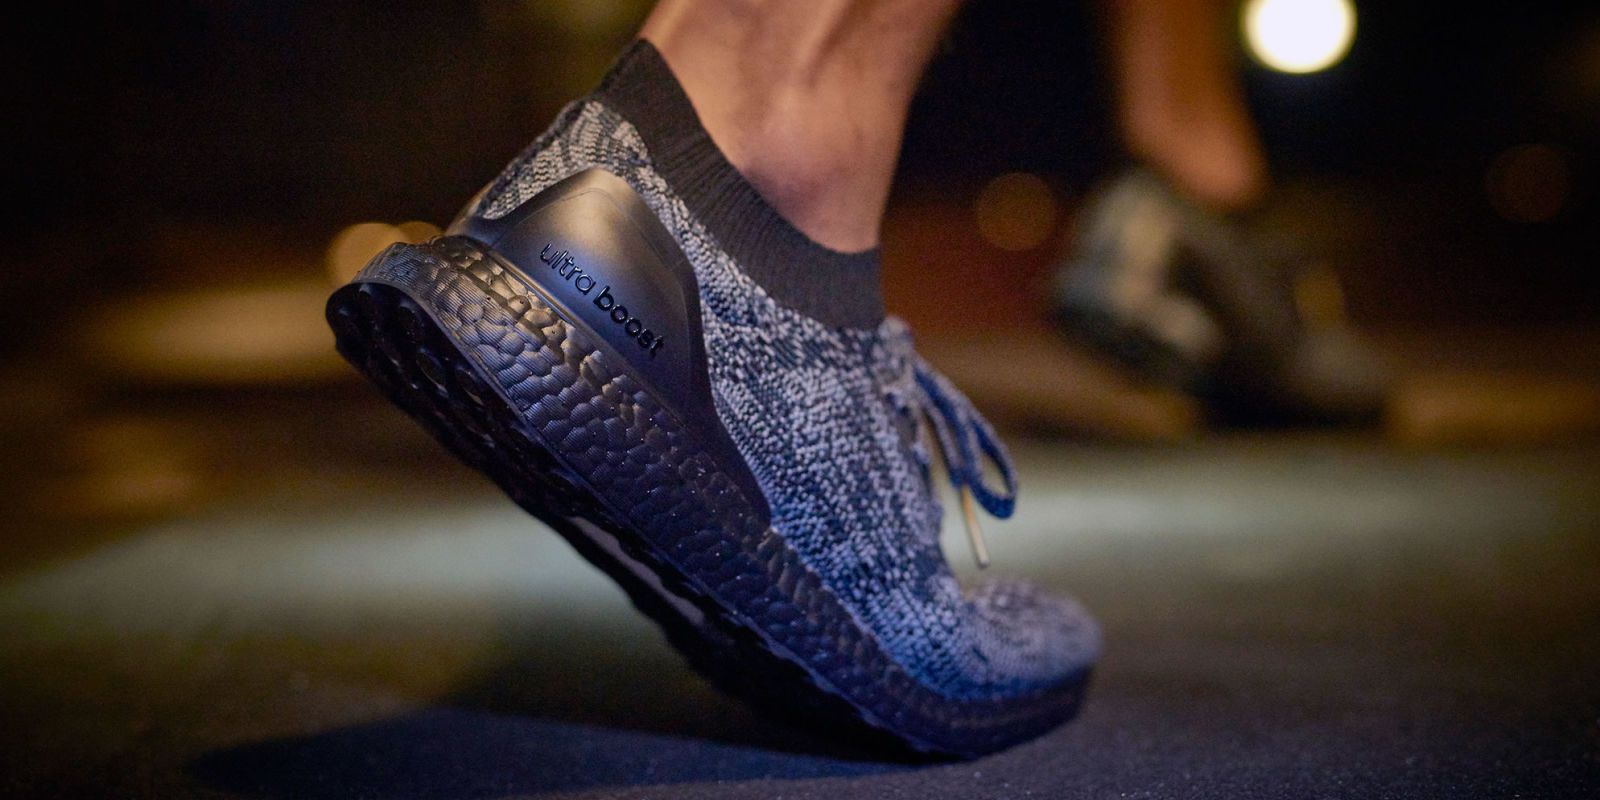 2018 Adidas PureBOOST X - New Women's Adidas Running Shoe Review